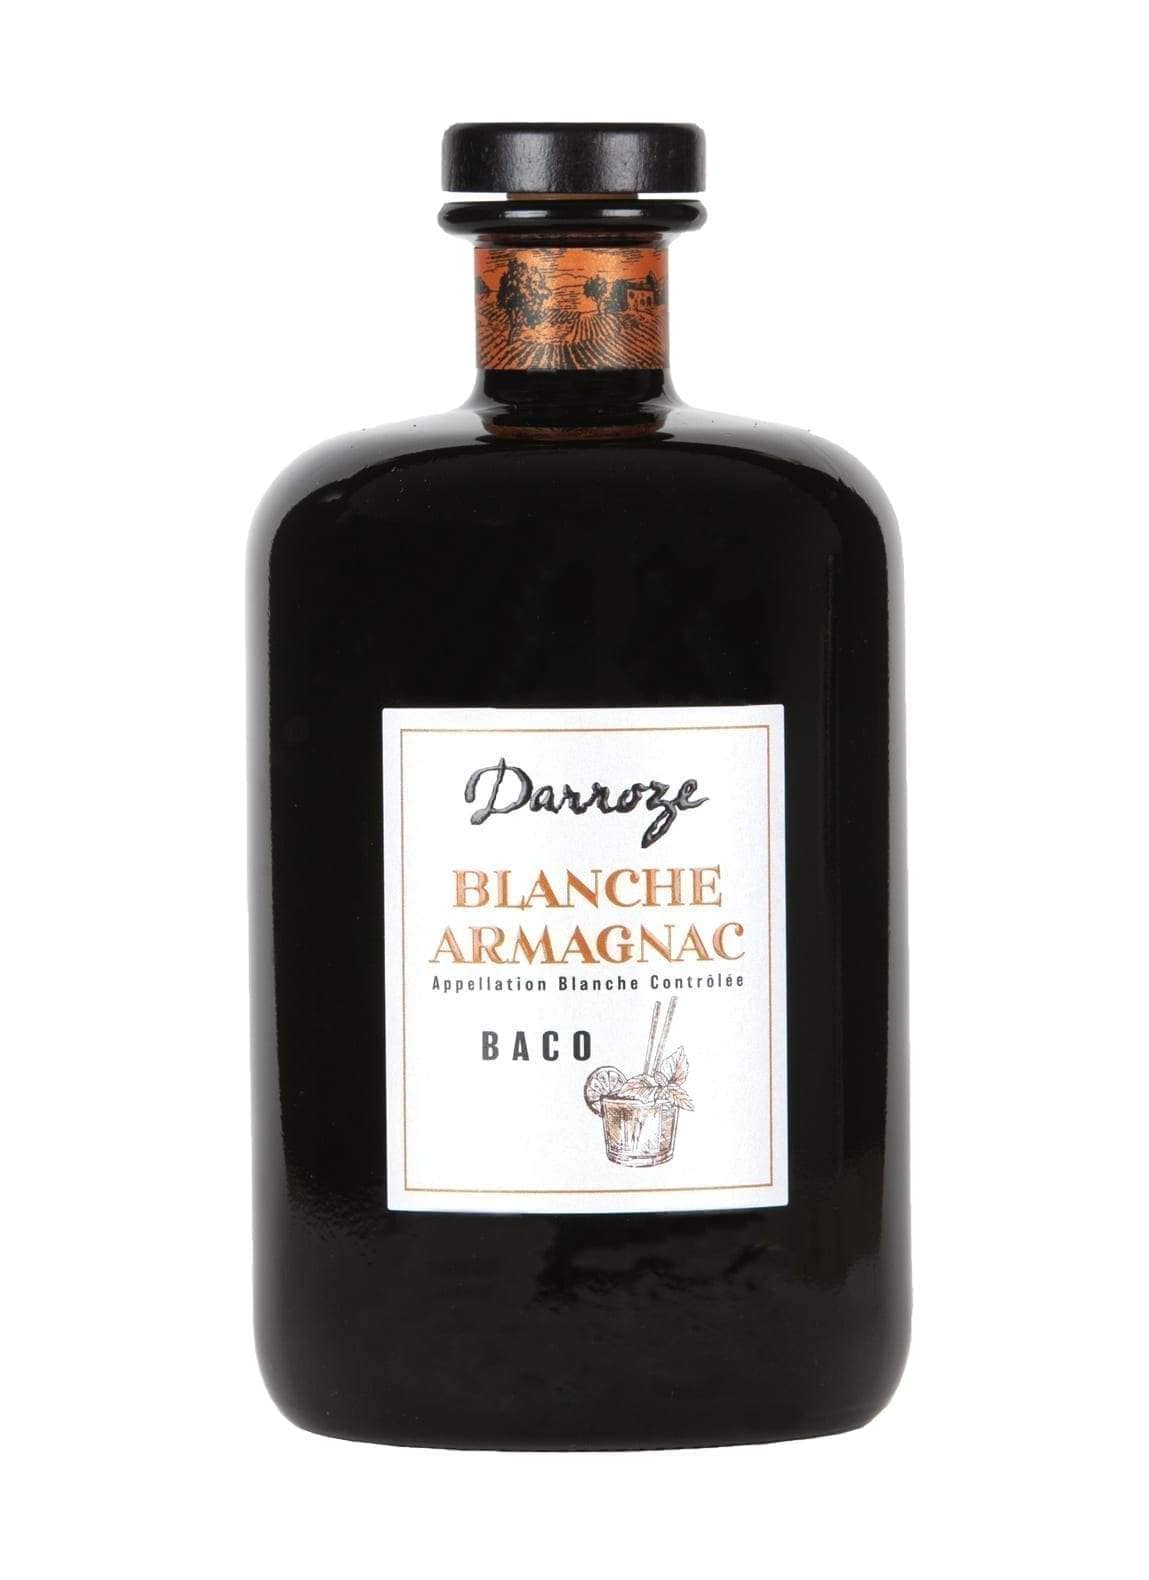 Darroze Grand-Bas Armagnac Blanche Baco 49% 700ml | Brandy | Shop online at Spirits of France